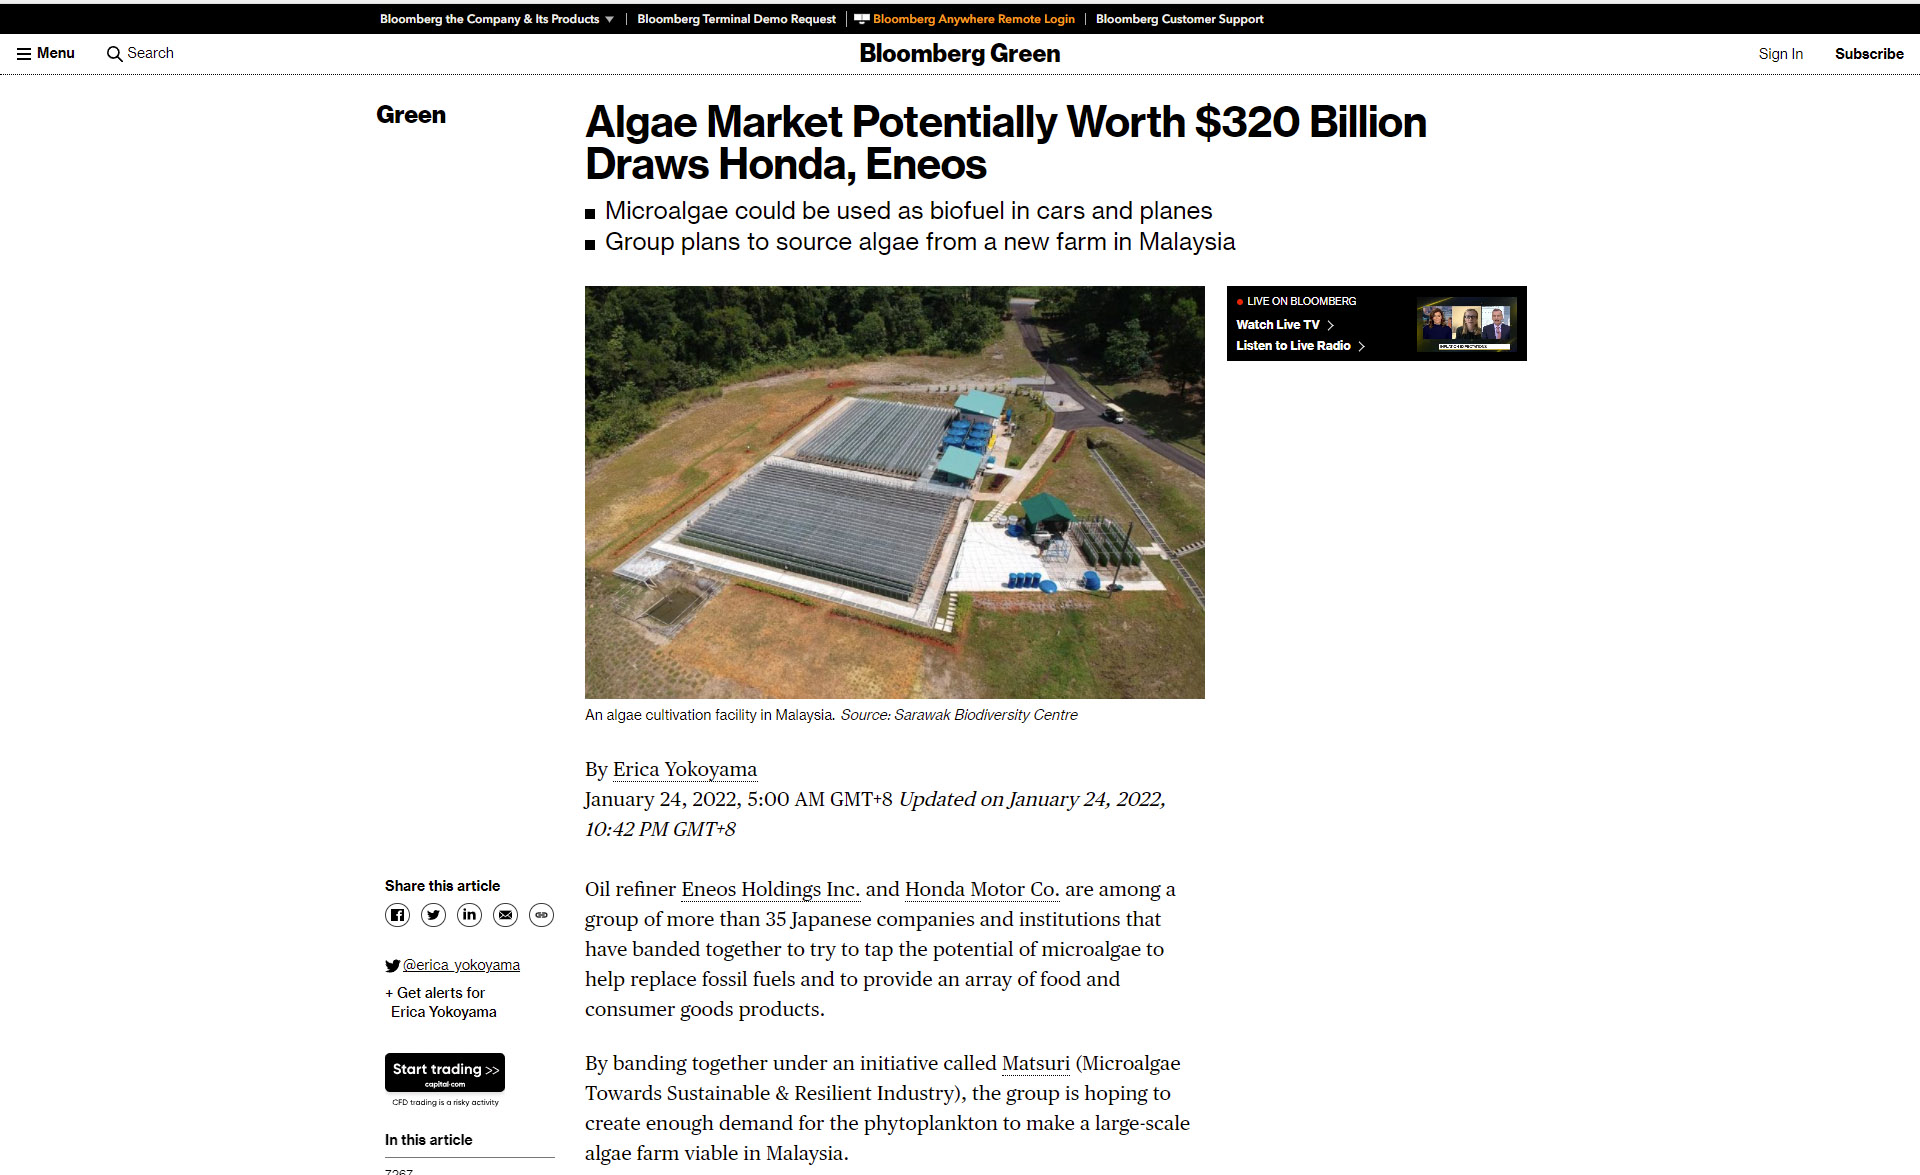 Bloomberg - Algae market potentially worth $320 Billion draws Honda, Eneos